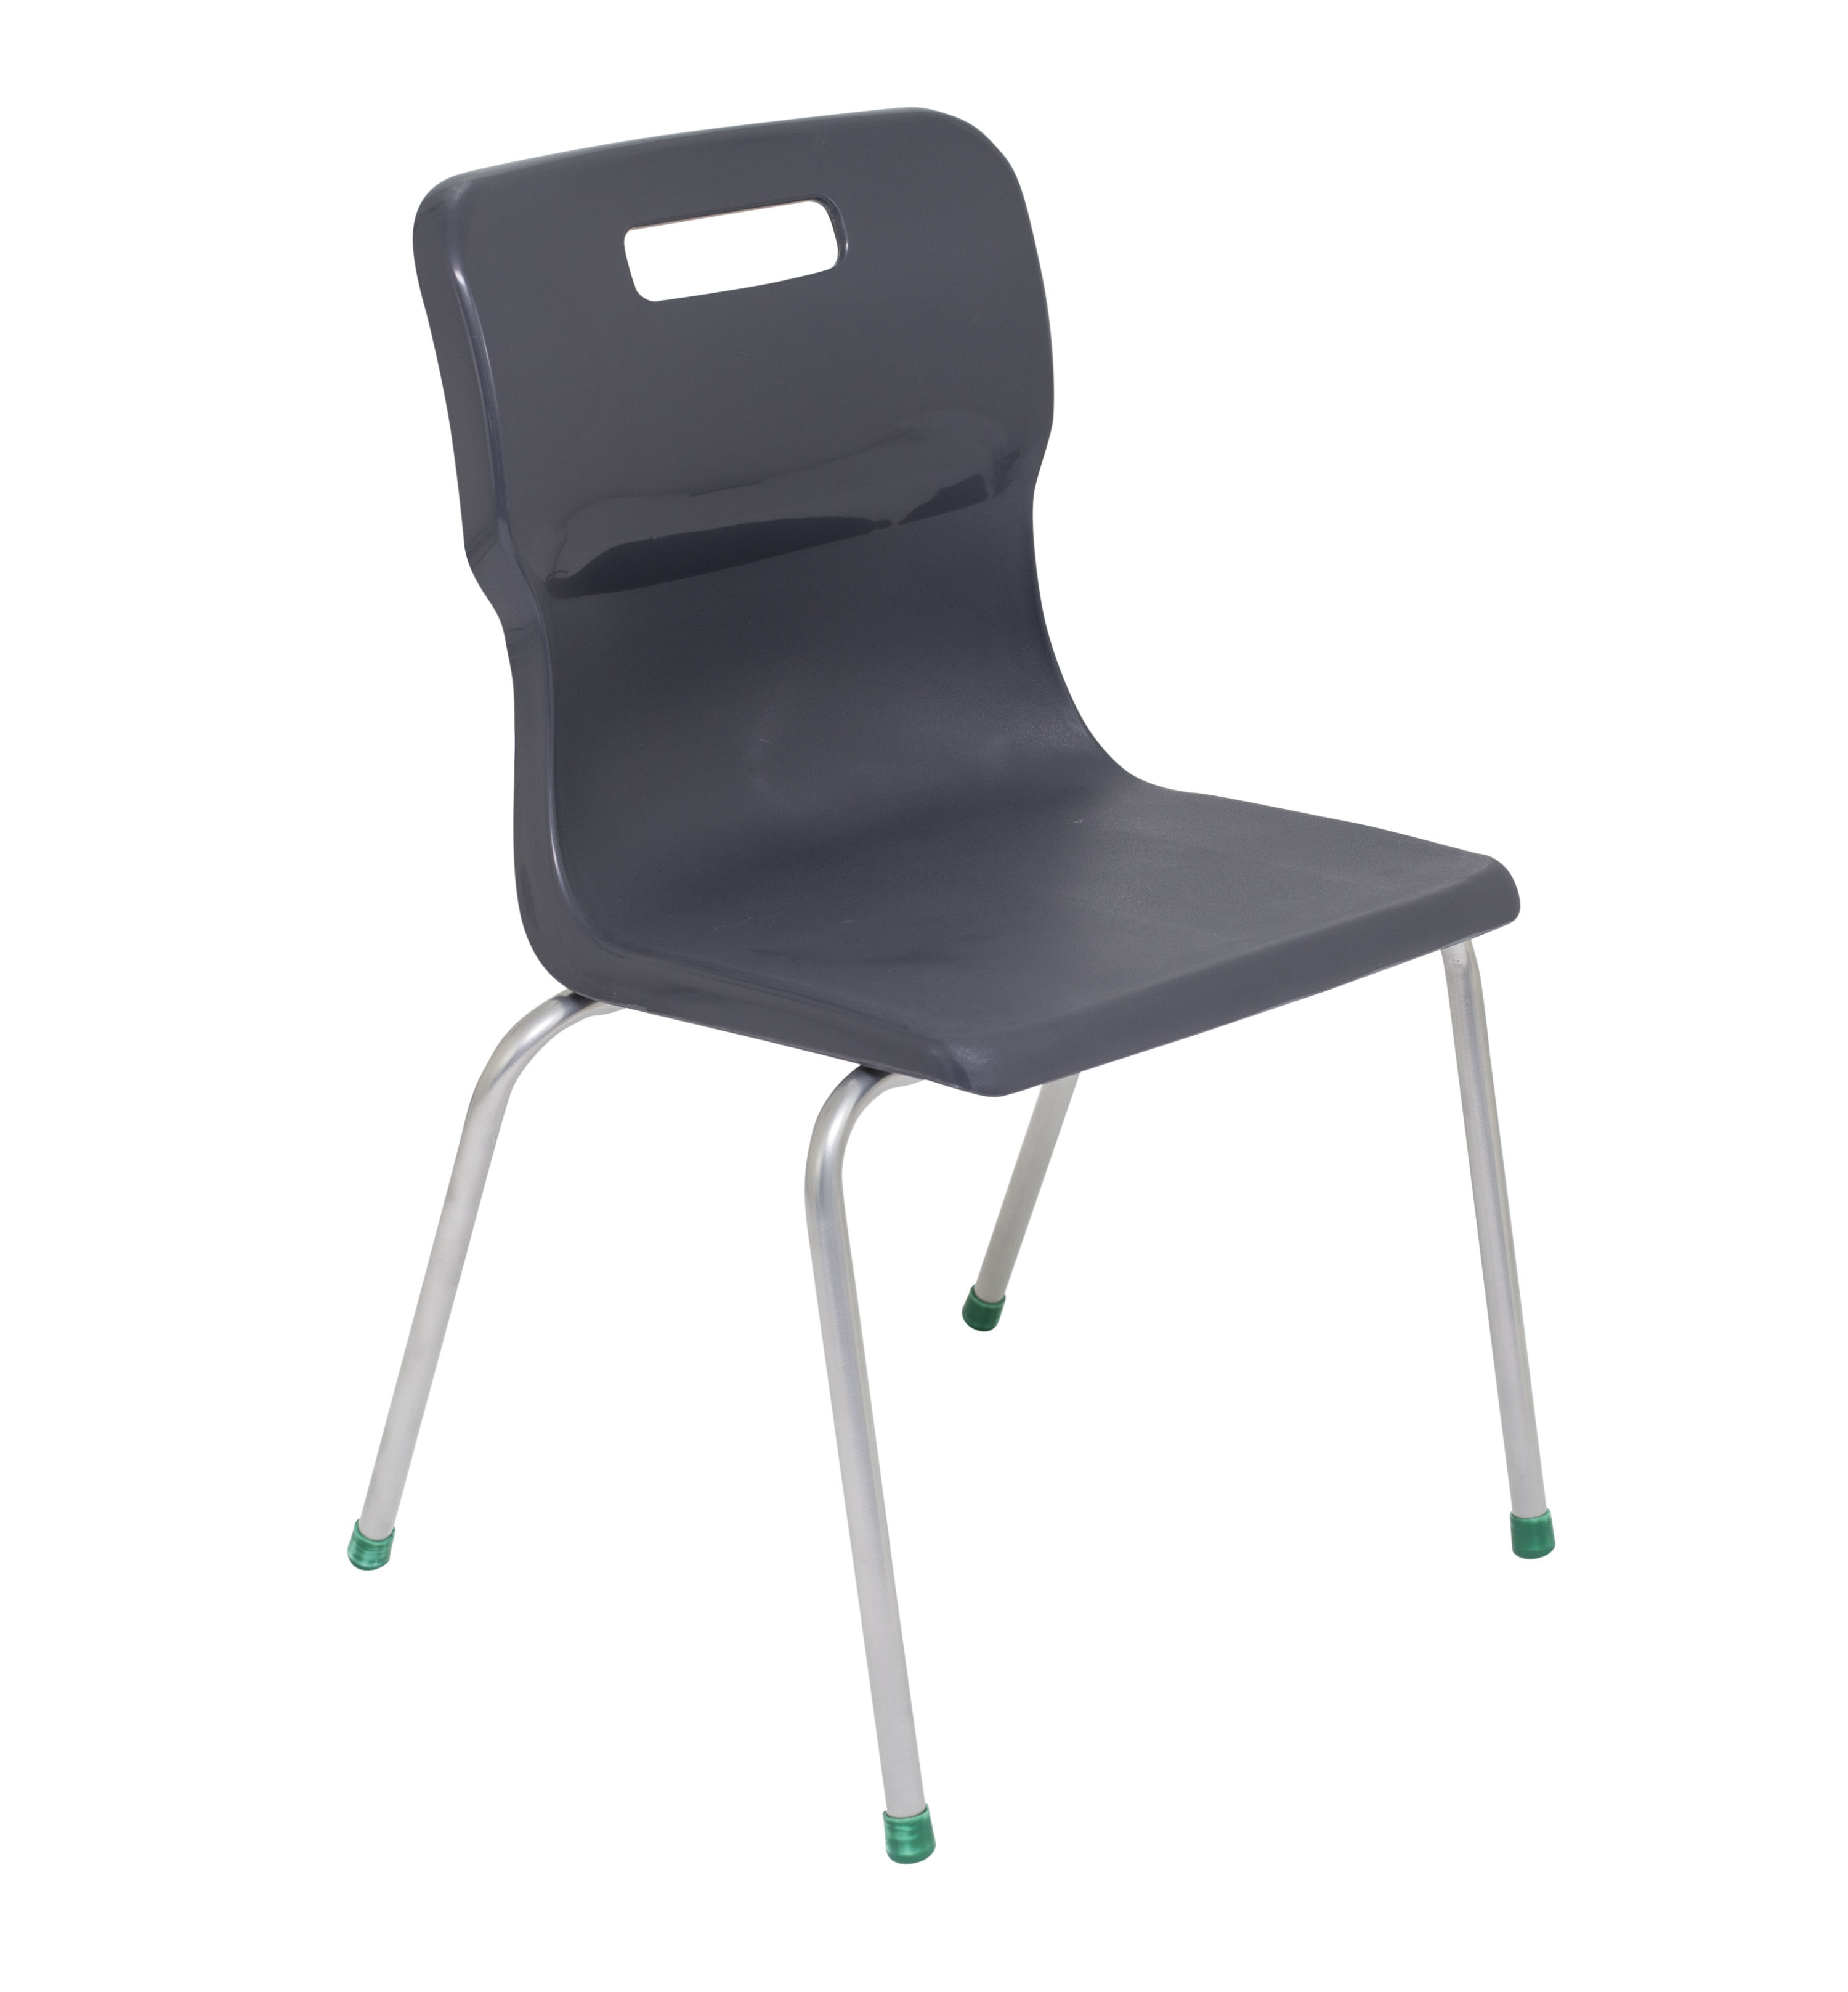 Titan 4 Leg Chair Size 5 - 430mm Seat Height - Charcoal